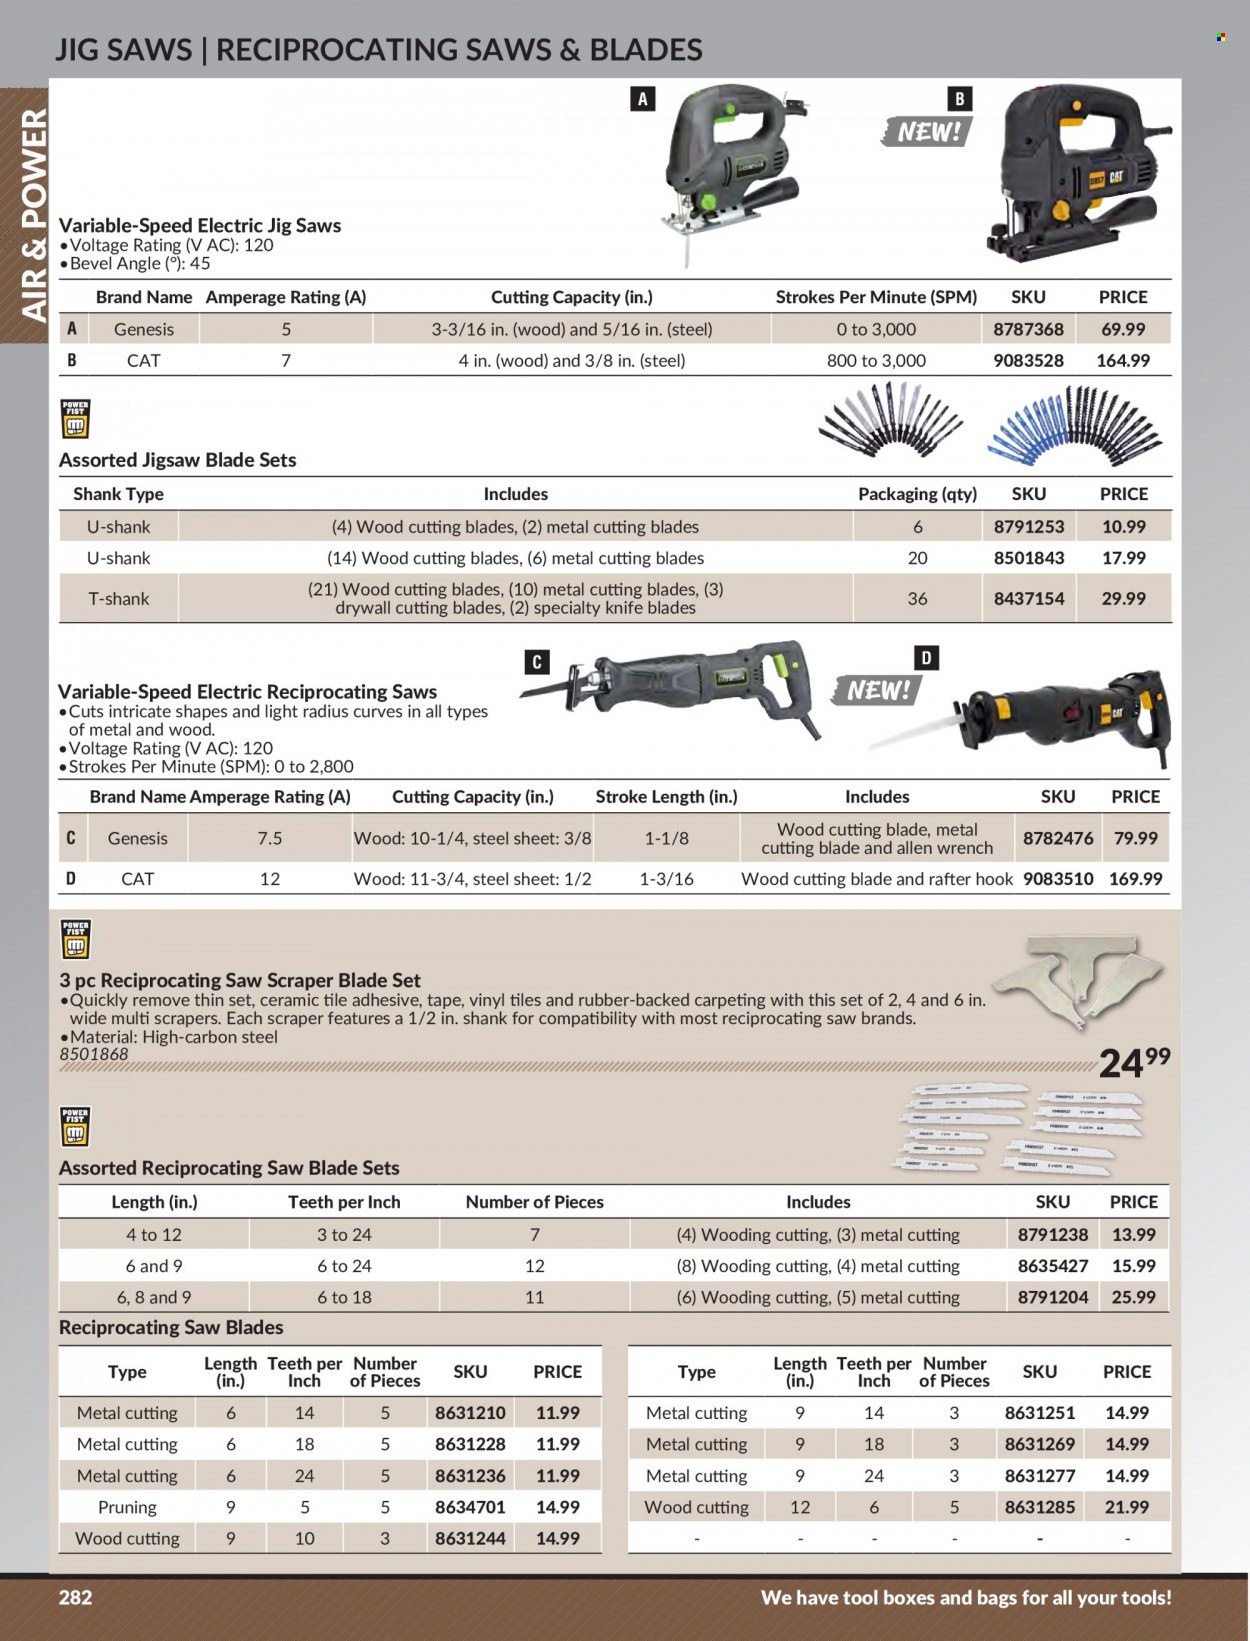 thumbnail - Princess Auto Flyer - Sales products - adhesive, jig saw, reciprocating saw blade, tool box, knife. Page 288.